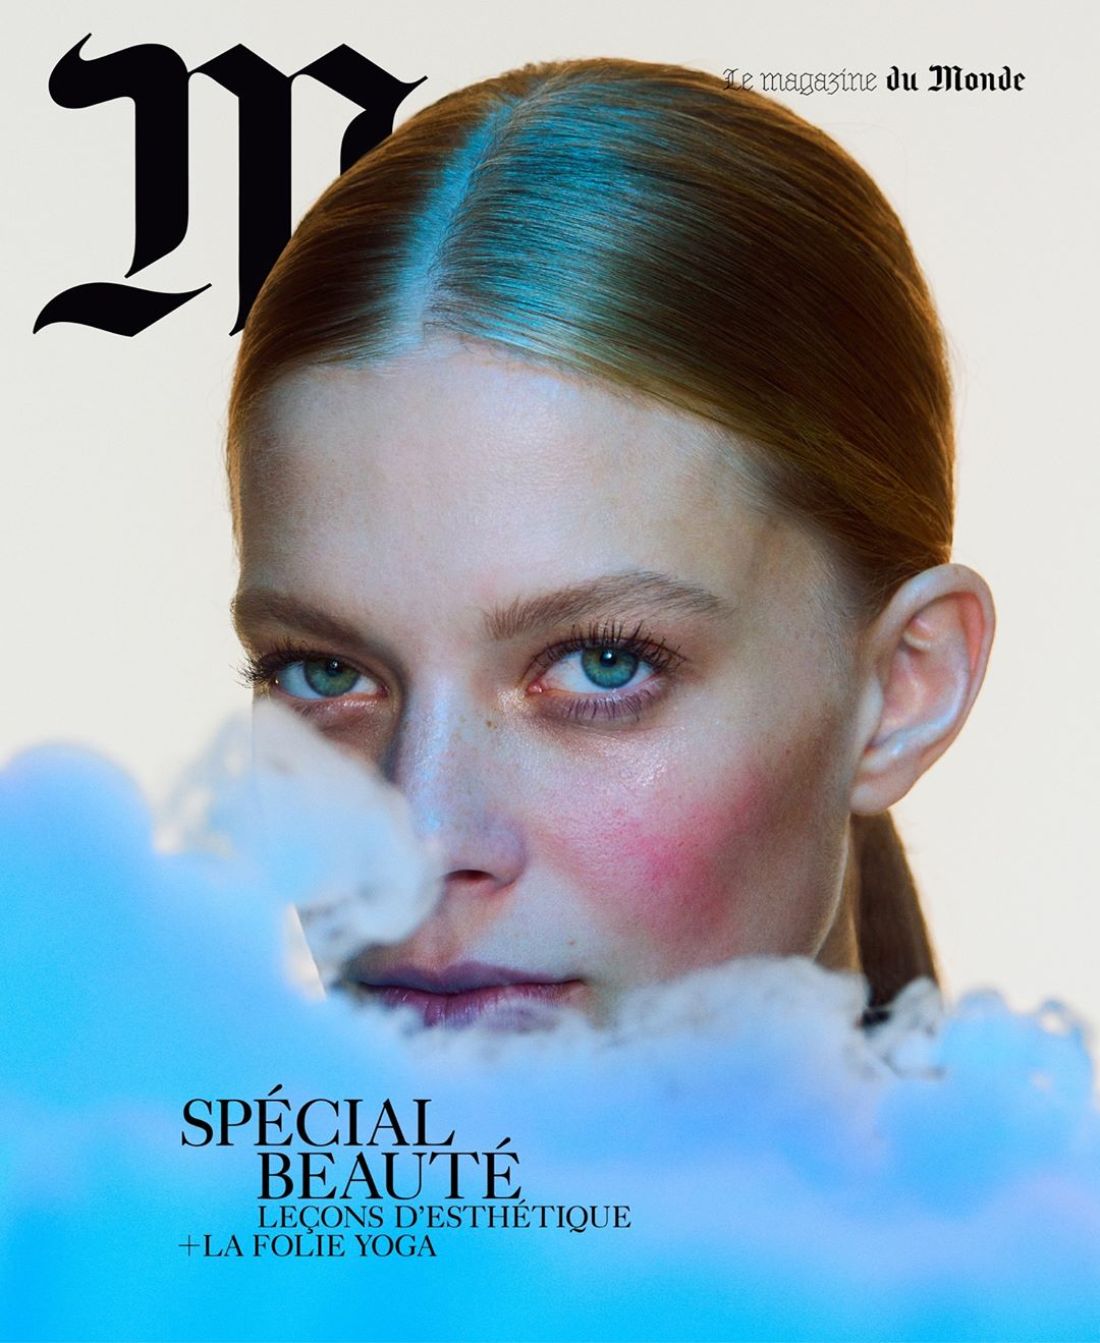 Lexi Boling Covers M Le magazine du Monde November 2017 Digital Beauty Special